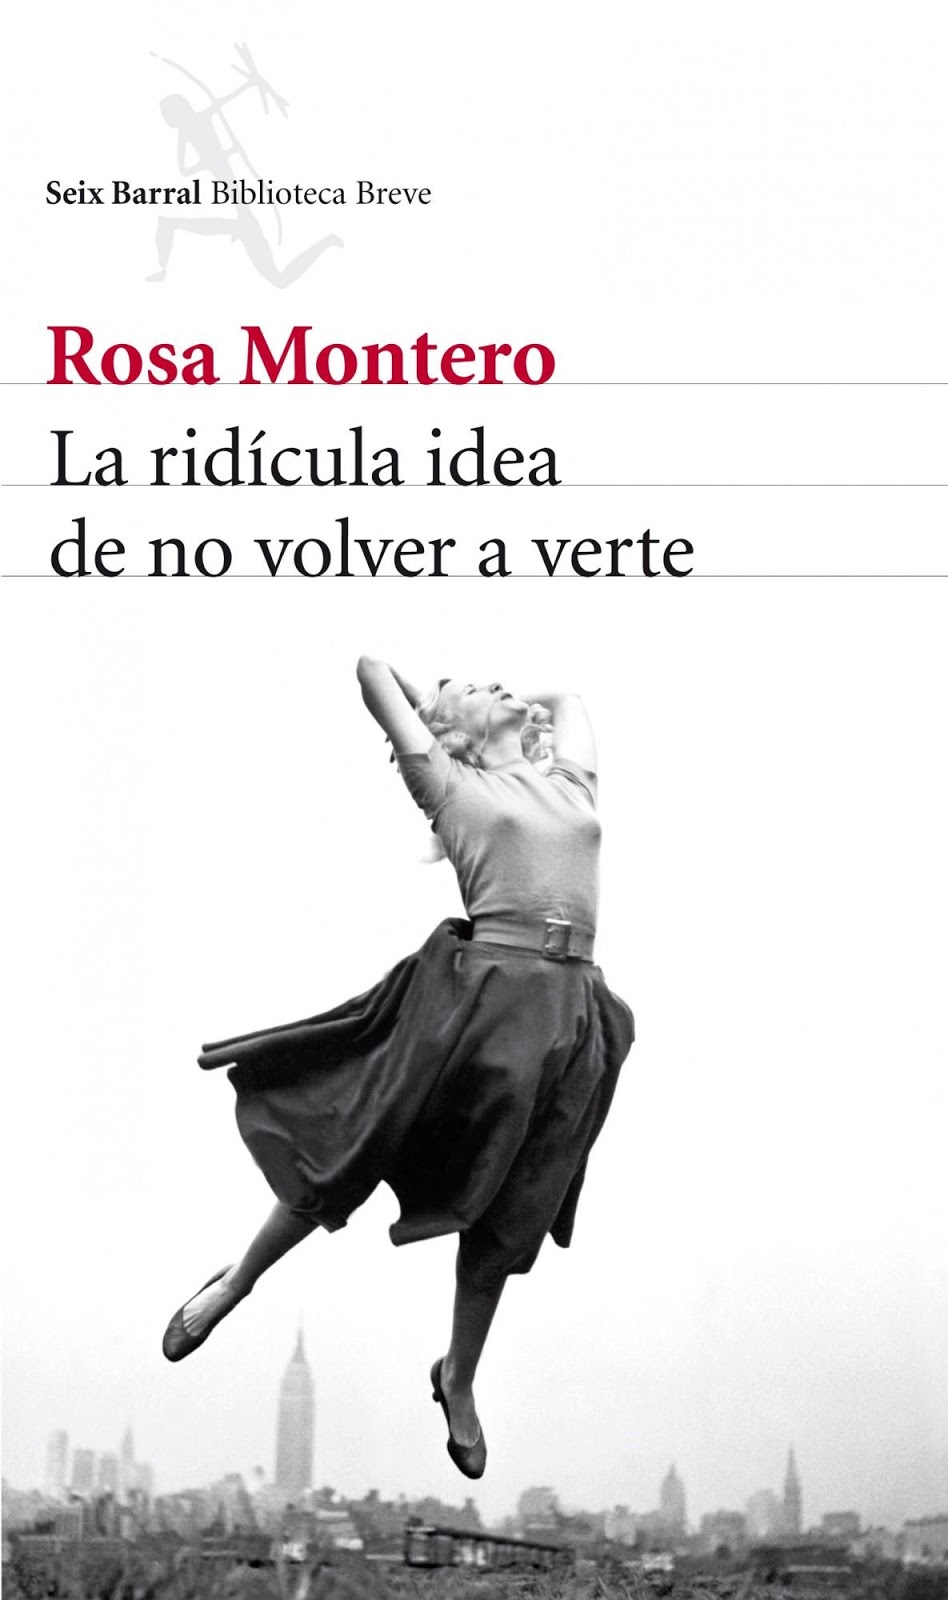 La ridícula idea de no volver a verte. Rosa Montero. Seix Barral, España: 2013.